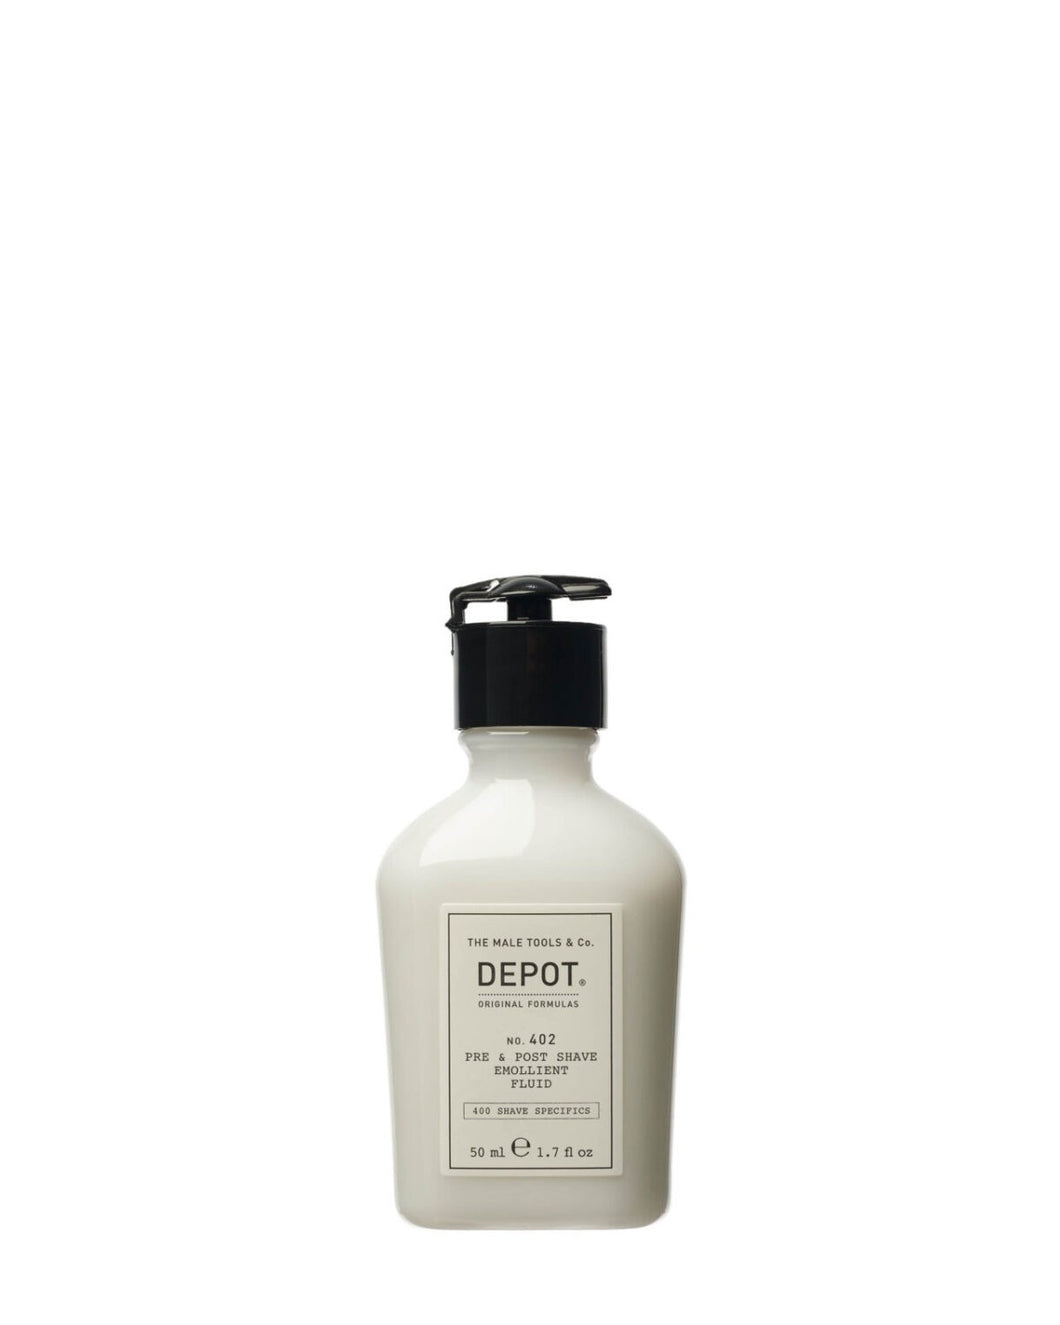 Depot- Pre & Post shave emollient fluid 402